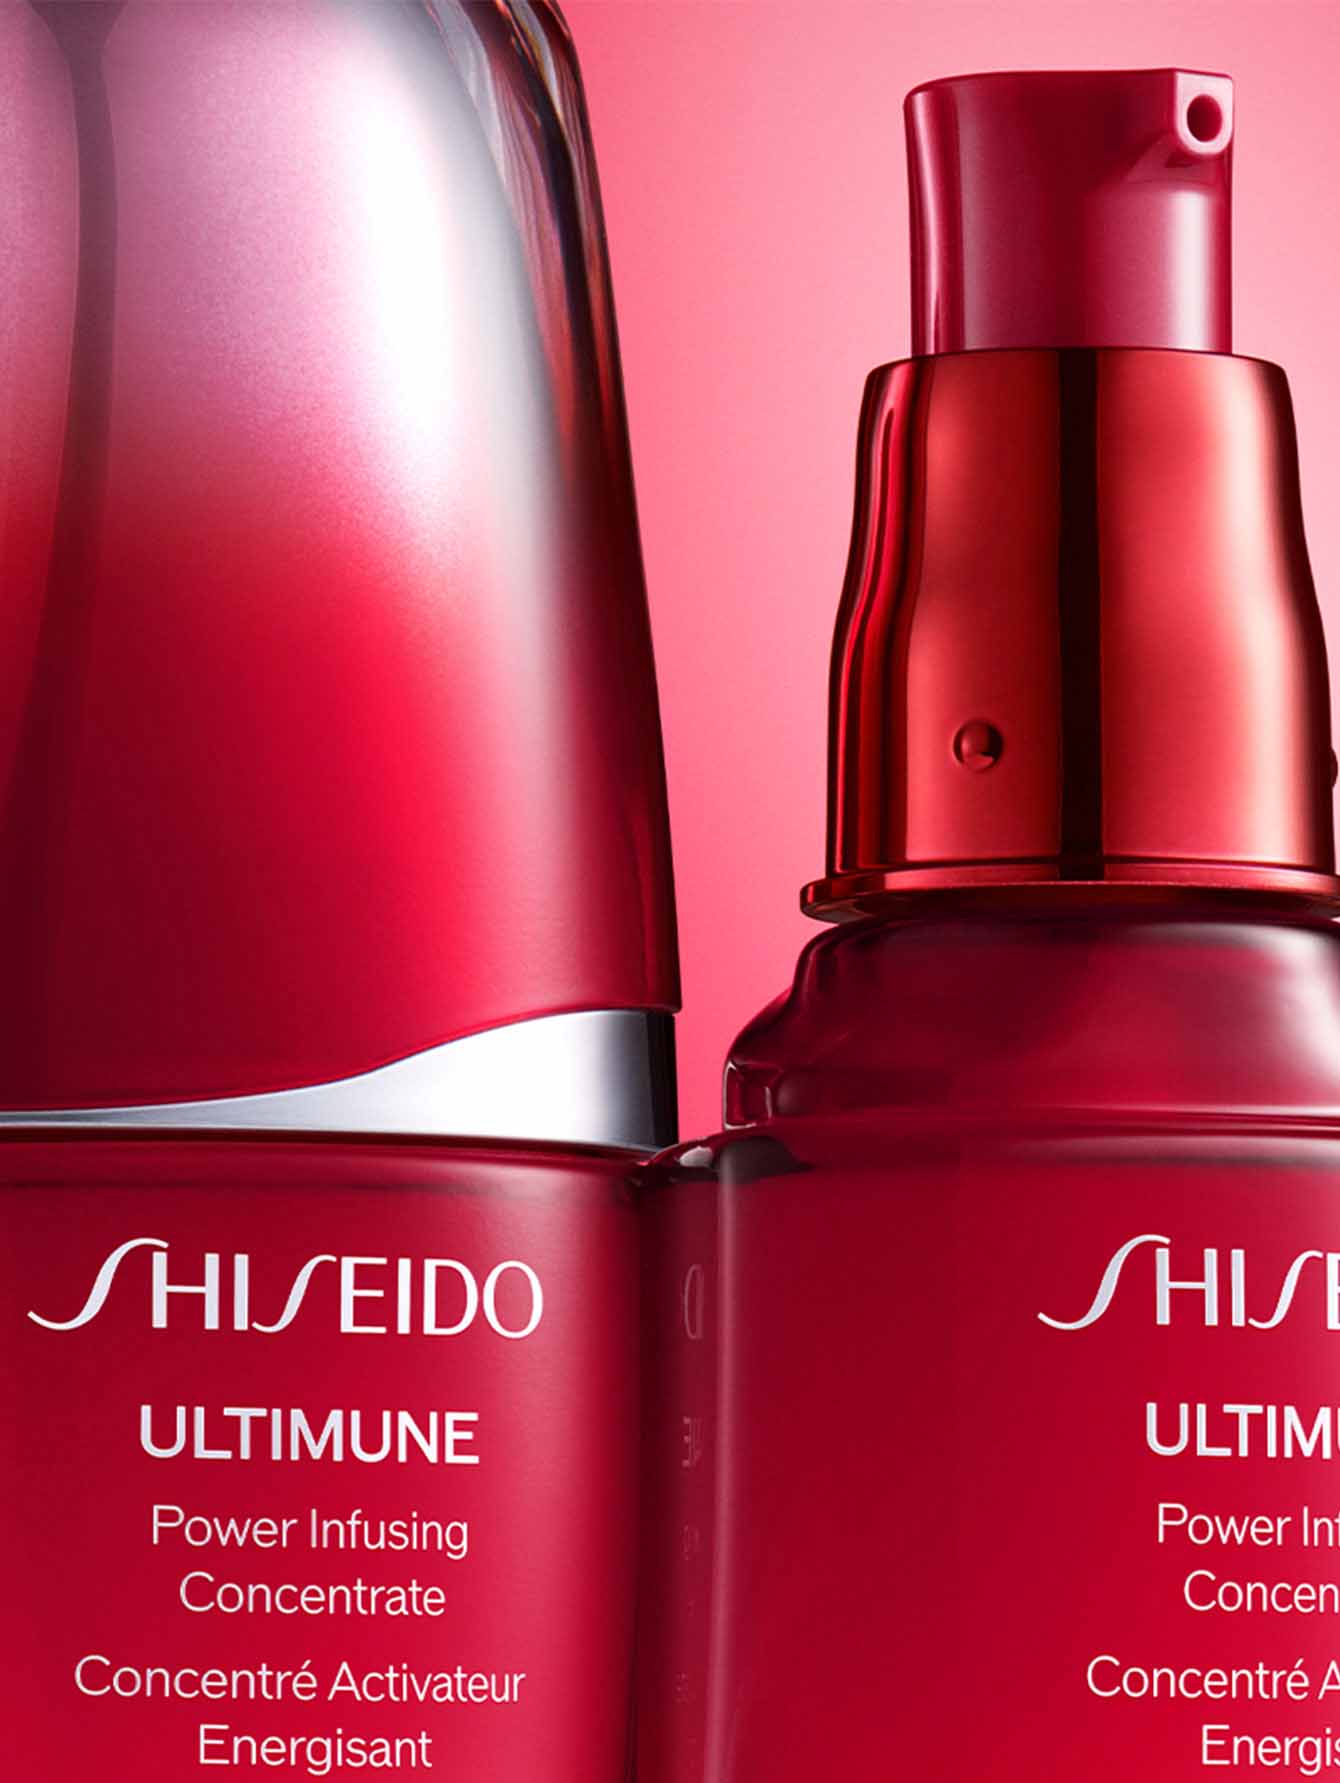 Ultimune концентрат. Shiseido Ultimune концентрат. Концентрат восстанавливающий Shiseido Ultimune. Shiseido Ultimune концентрат, восстанавливающий энергию кожи n, Ginza Tokyo. Shiseido Ultimune концентрат восстанавливающий энергию кожи n упаковка.